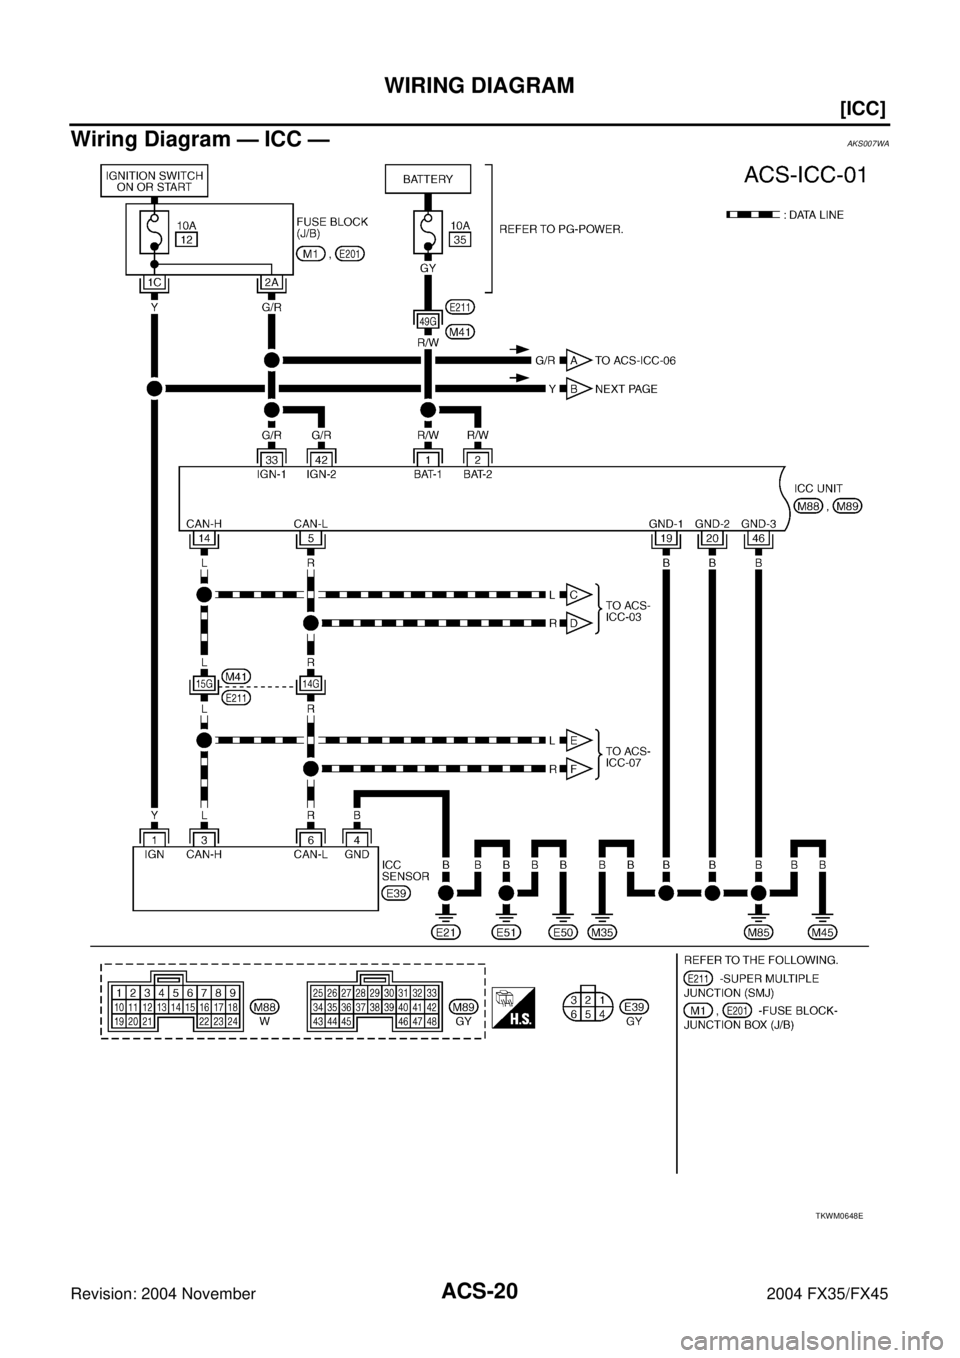 INFINITI FX35 2004 Owners Manual ACS-20
[ICC]
WIRING DIAGRAM
Revision: 2004 November 2004 FX35/FX45
Wiring Diagram — ICC —AKS007WA
TKWM0648E 